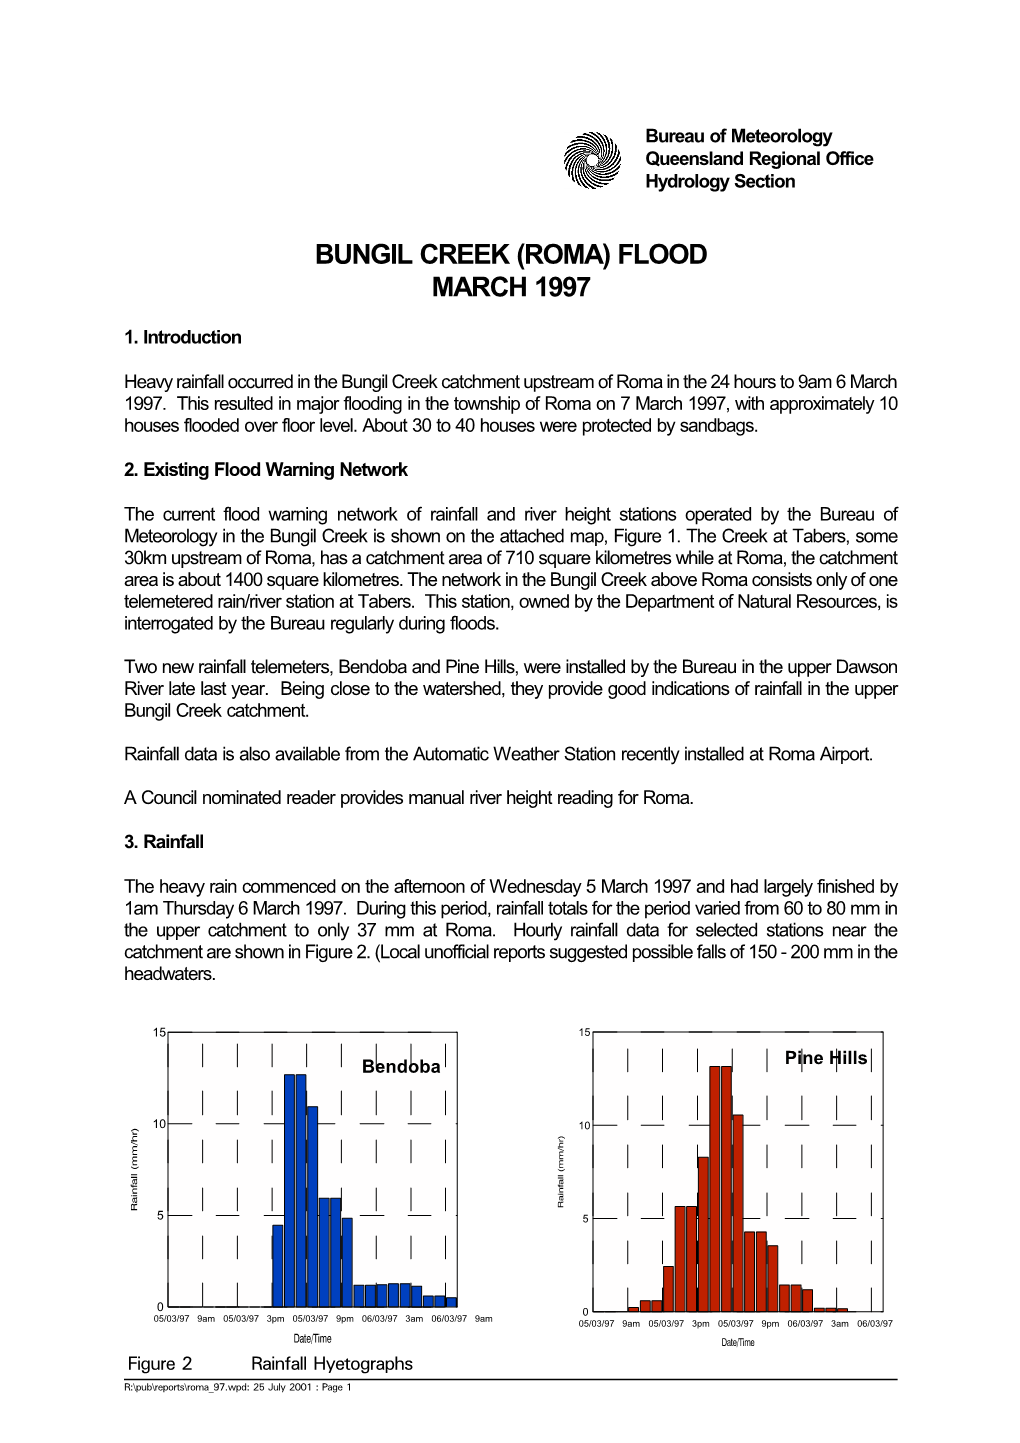 Bungil Creek (Roma) Flood March 1997